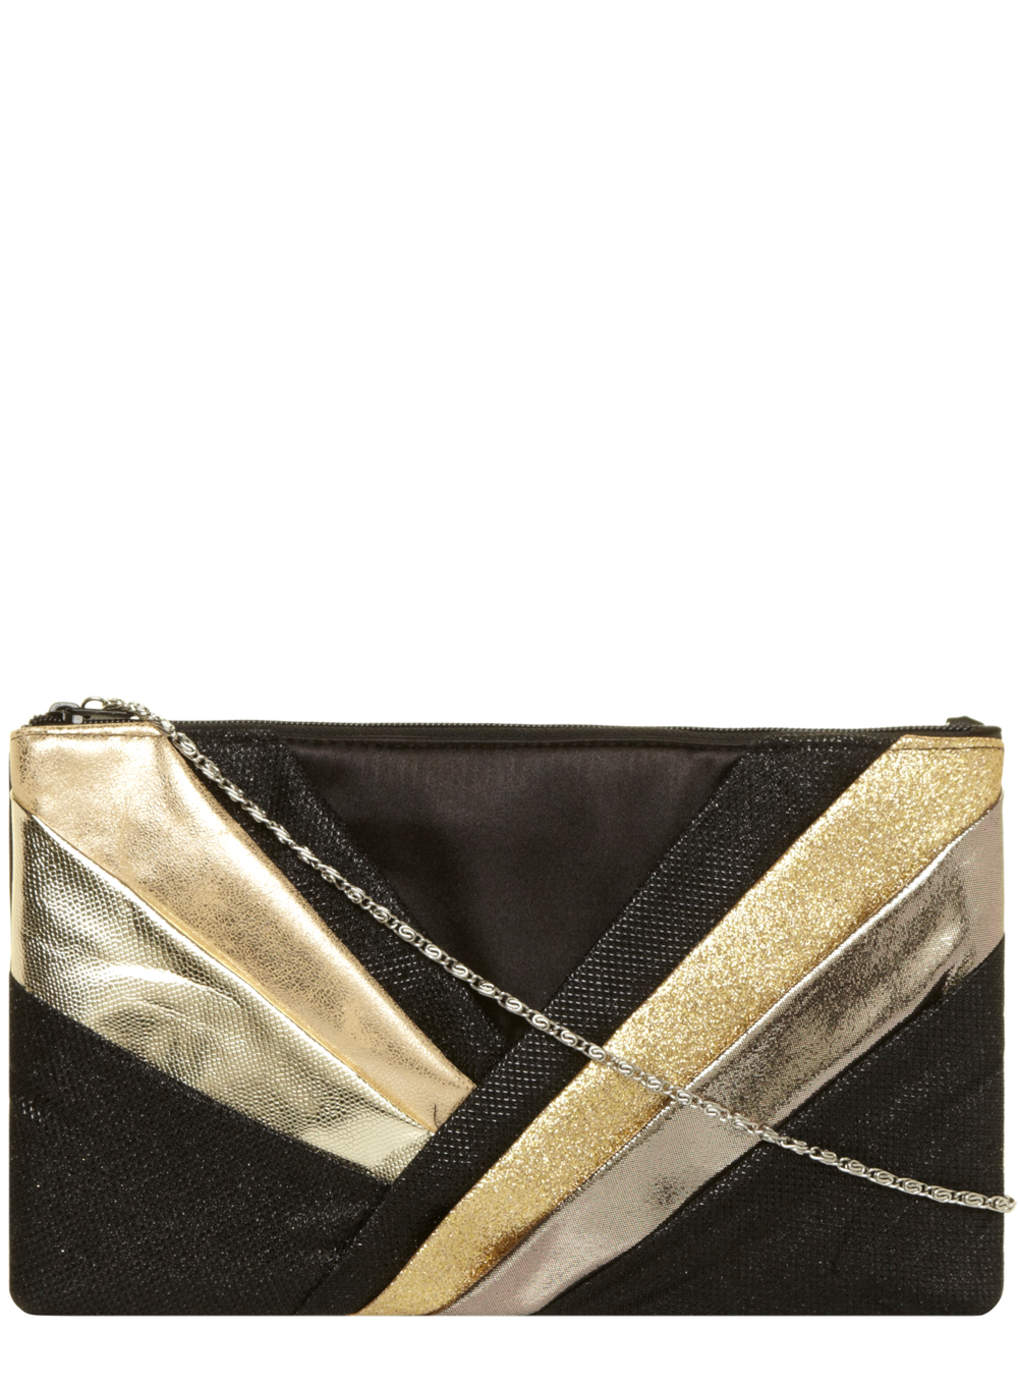 Dorothy Perkins Black and Metallic Layered Clutch Bag 68110001